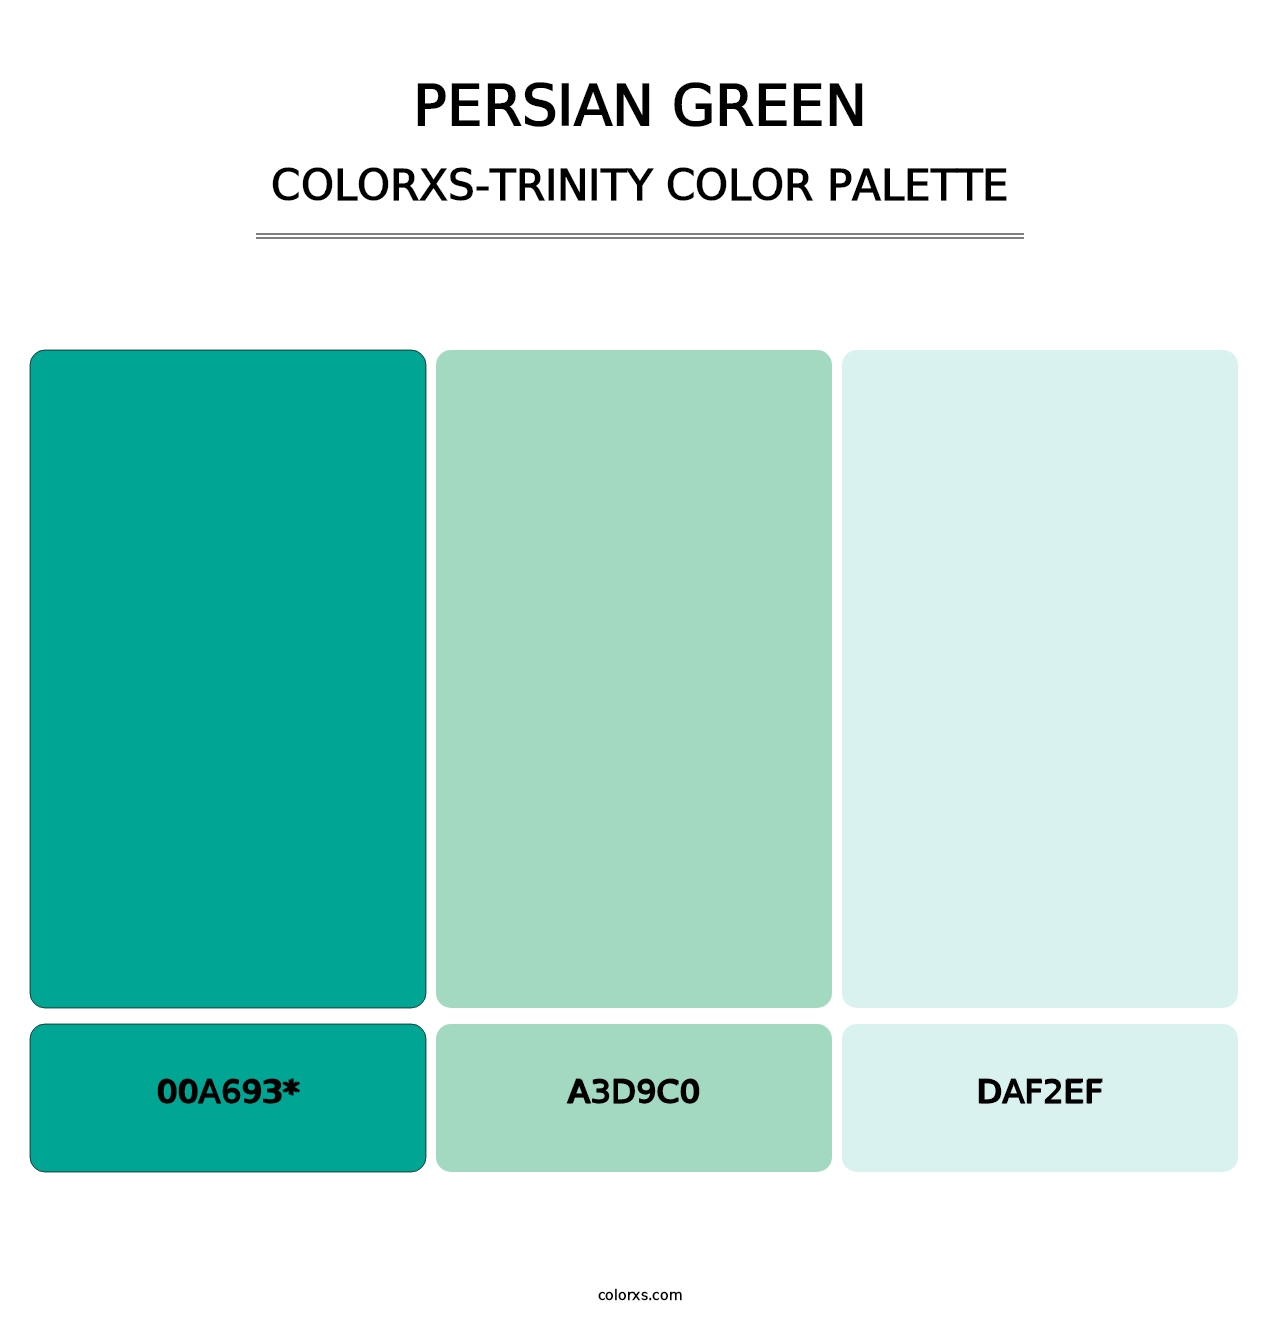 Persian Green - Colorxs Trinity Palette